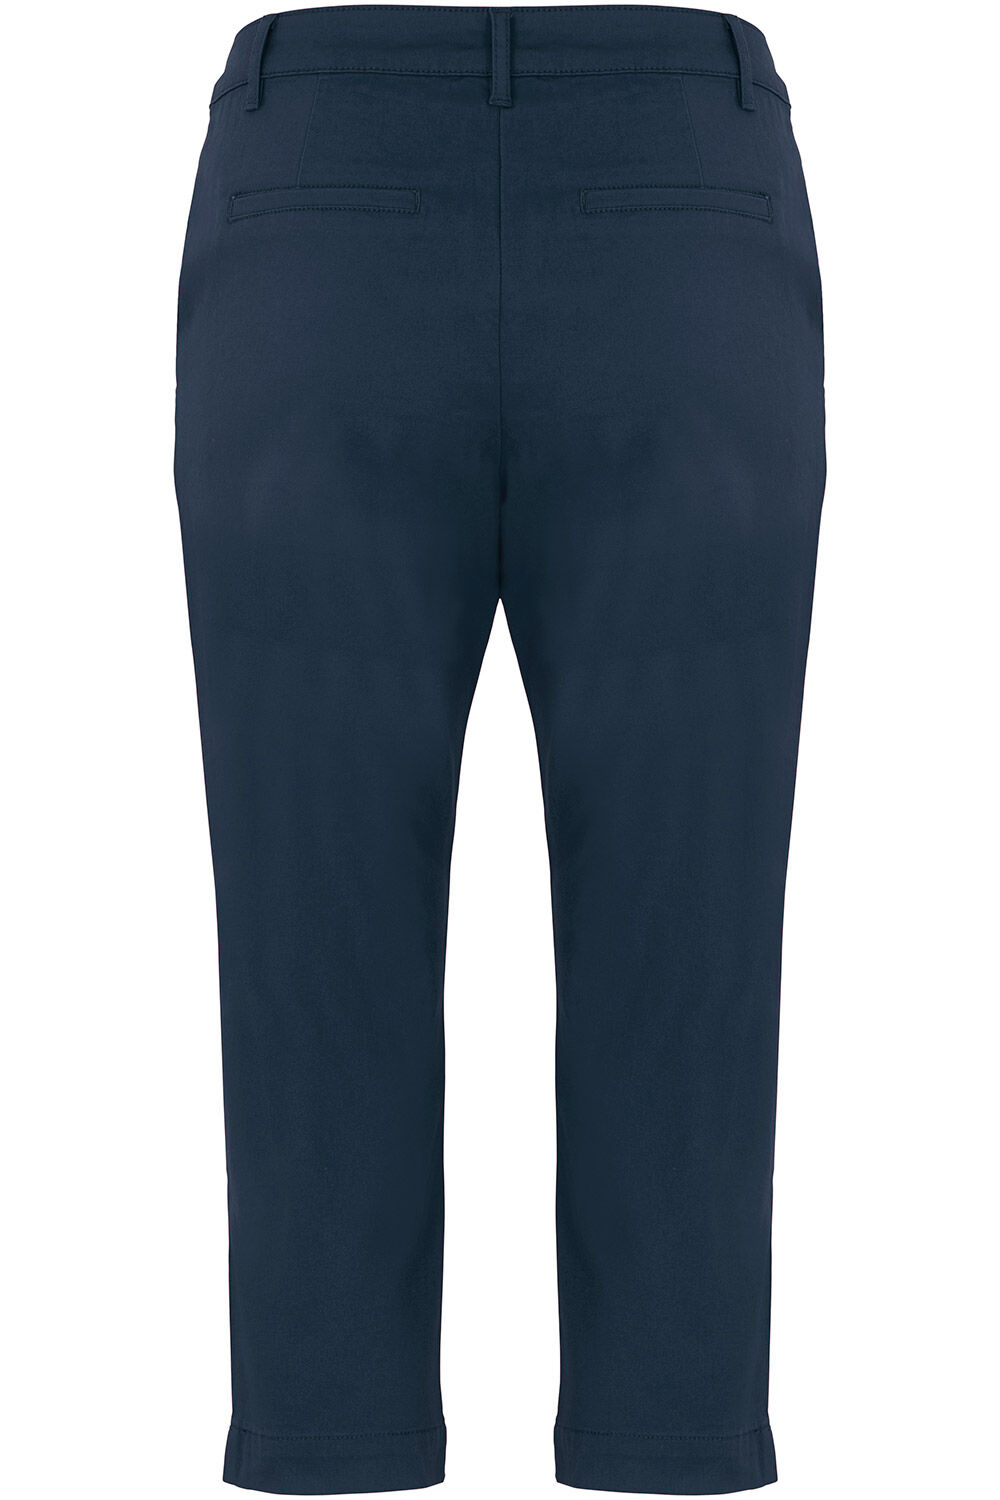 Ladies 34 Trousers Bonmarche Size 22 Elastic Waist Pockets Blue 11070   eBay